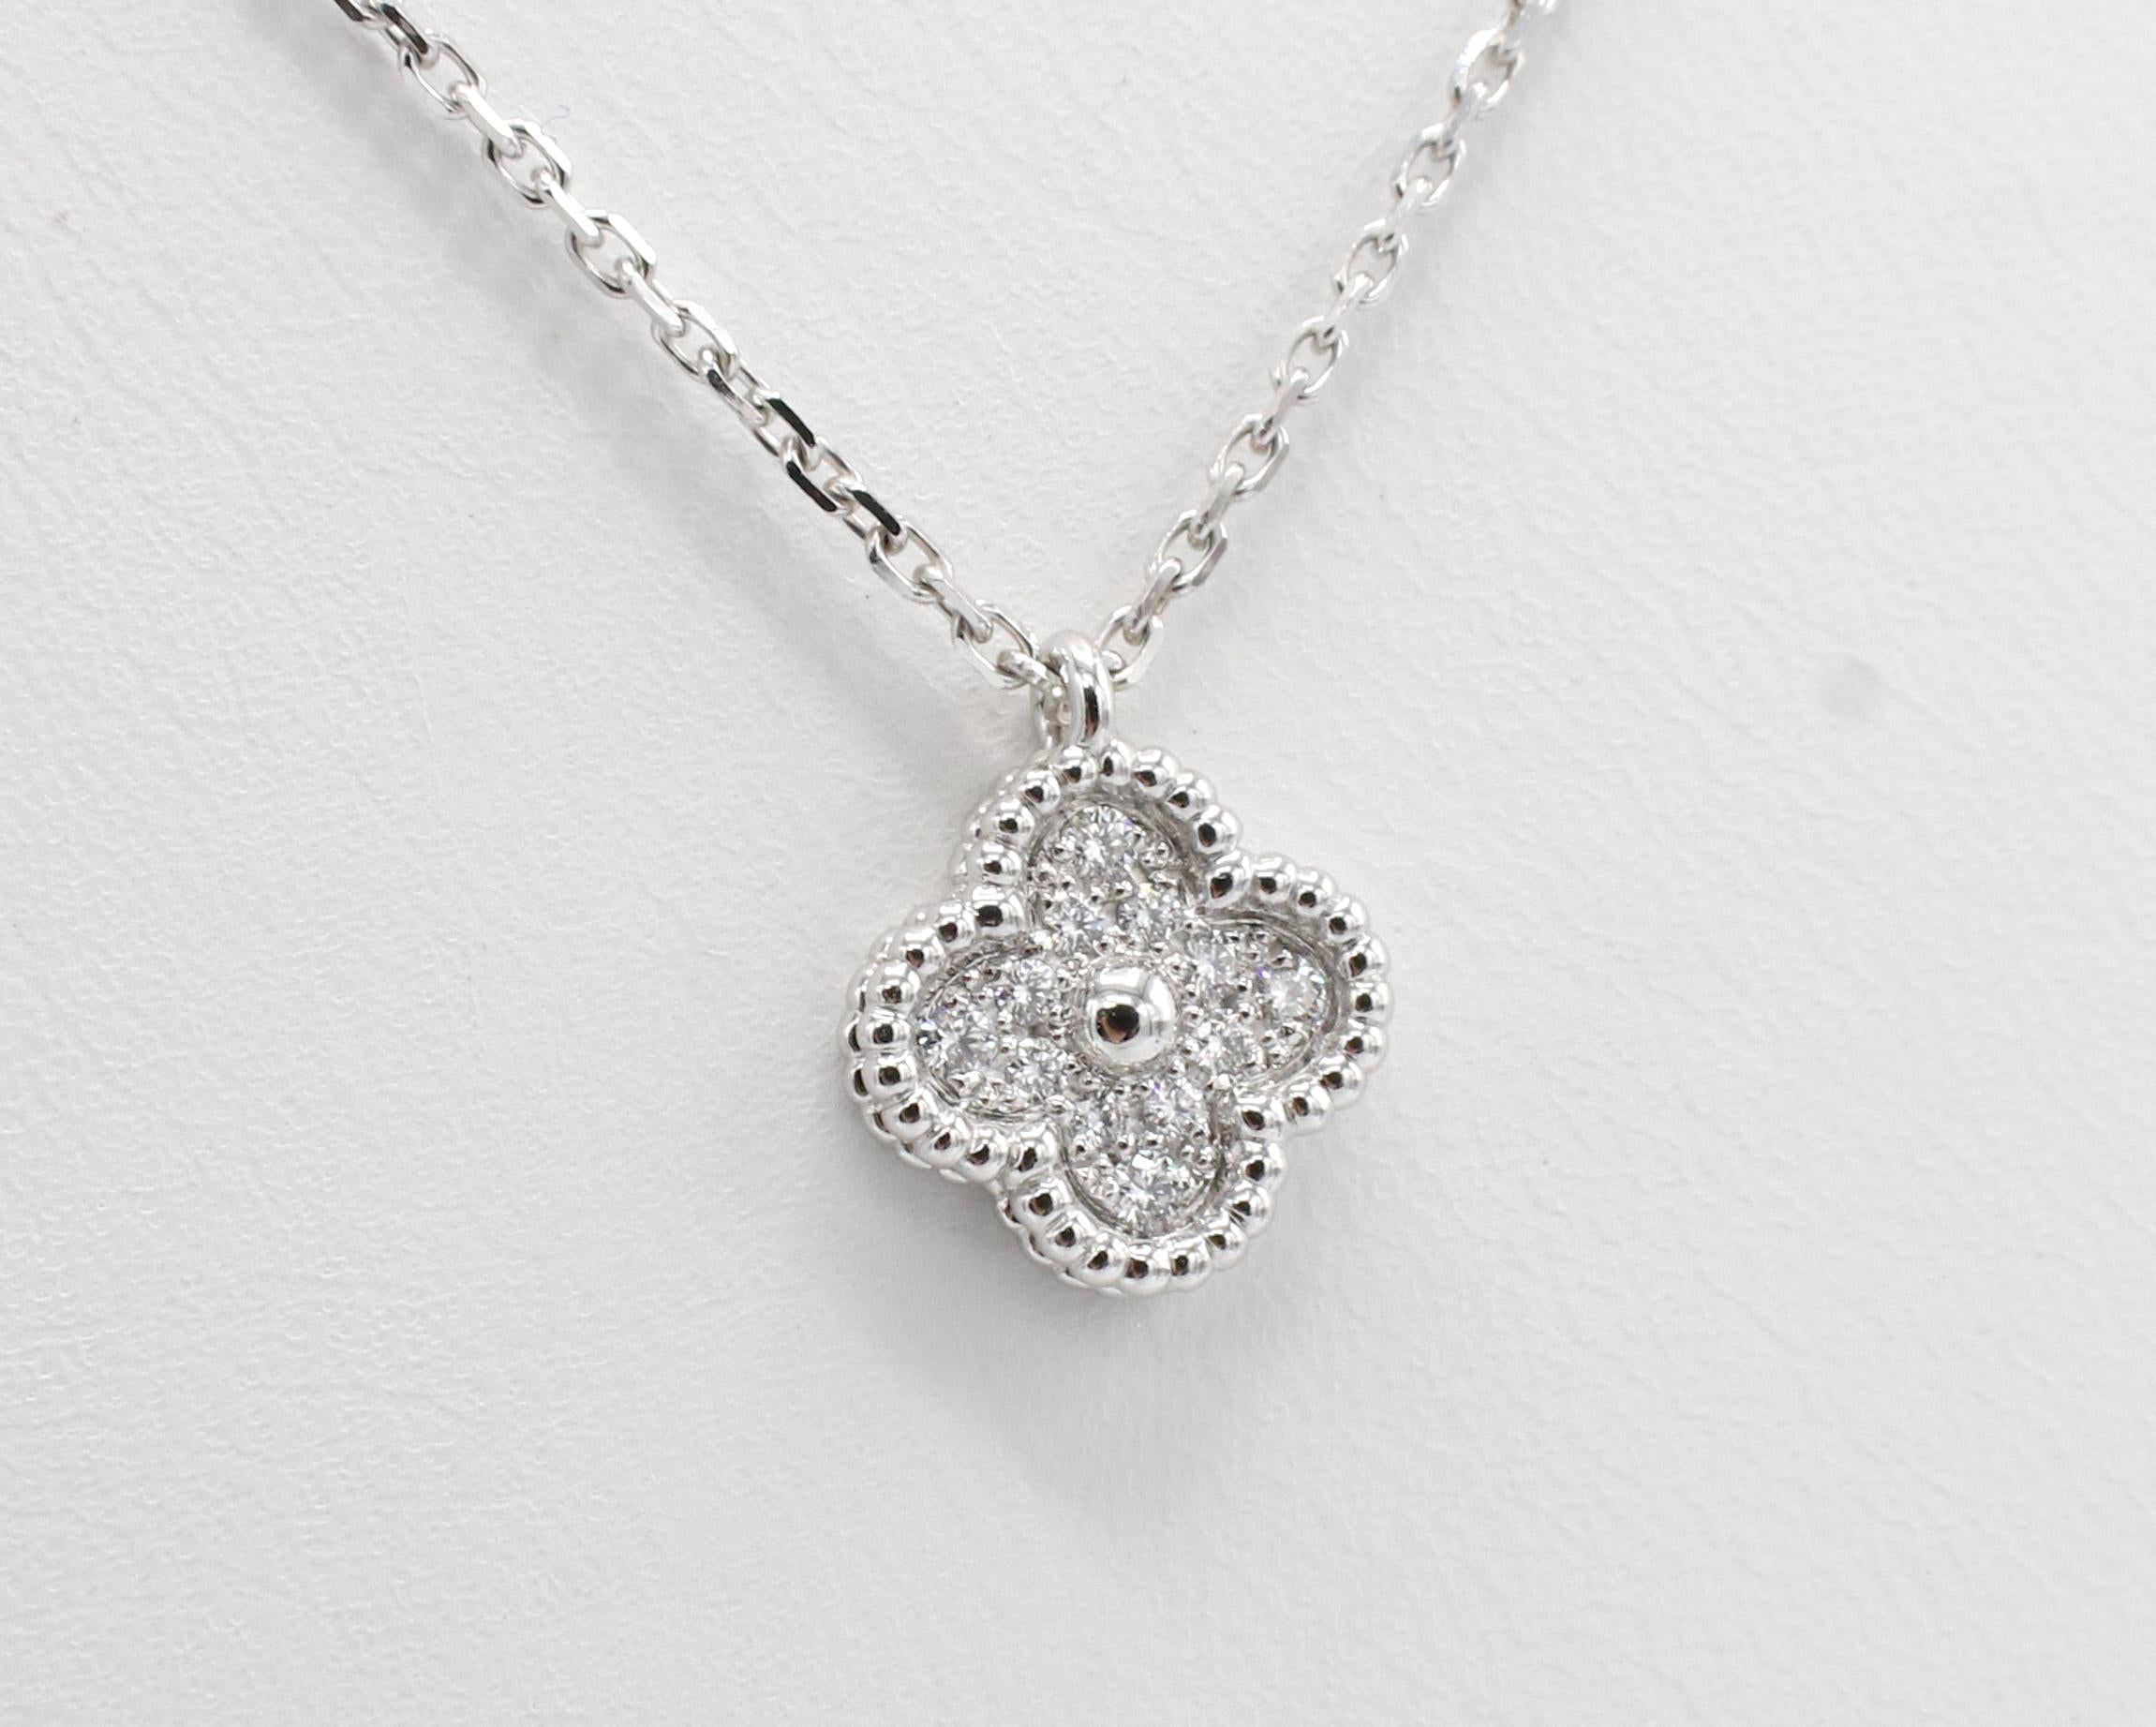 Van Cleef & Arpels Sweet Alhambra 18 Karat White Gold Diamond Pendant Necklace 
Metal: 18k white gold
Weight: 3.33 grams
Diamonds: Approx. .08 CTW E-F VVS round diamonds
Pendant: 9 x 9mm
Chain length: 15.75